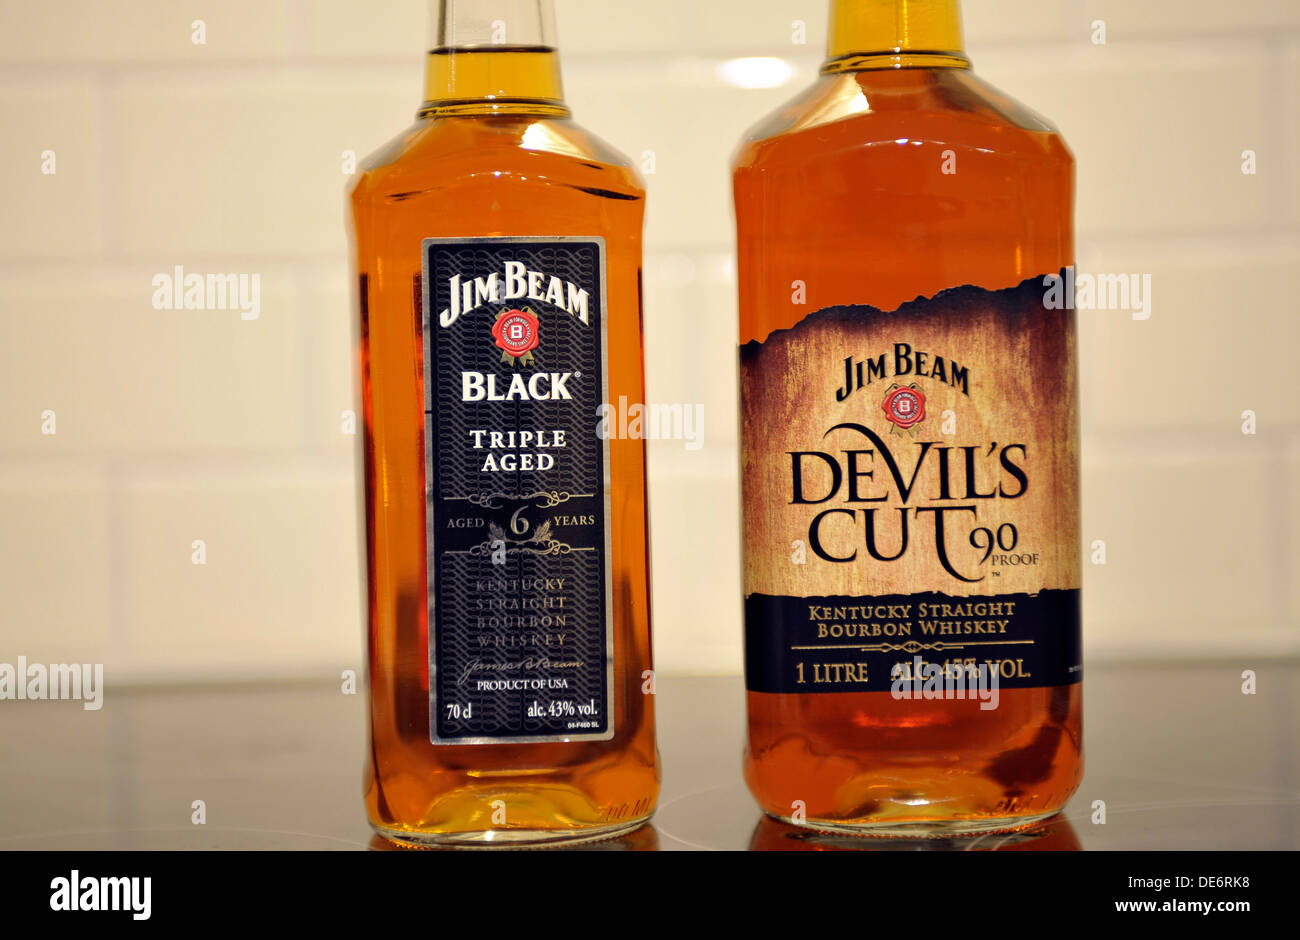 Bottles of Jim Beam Kentucky Straight Bourbon. Triple aged 6 year old Black (left) Devil's Cut. Stock Photo